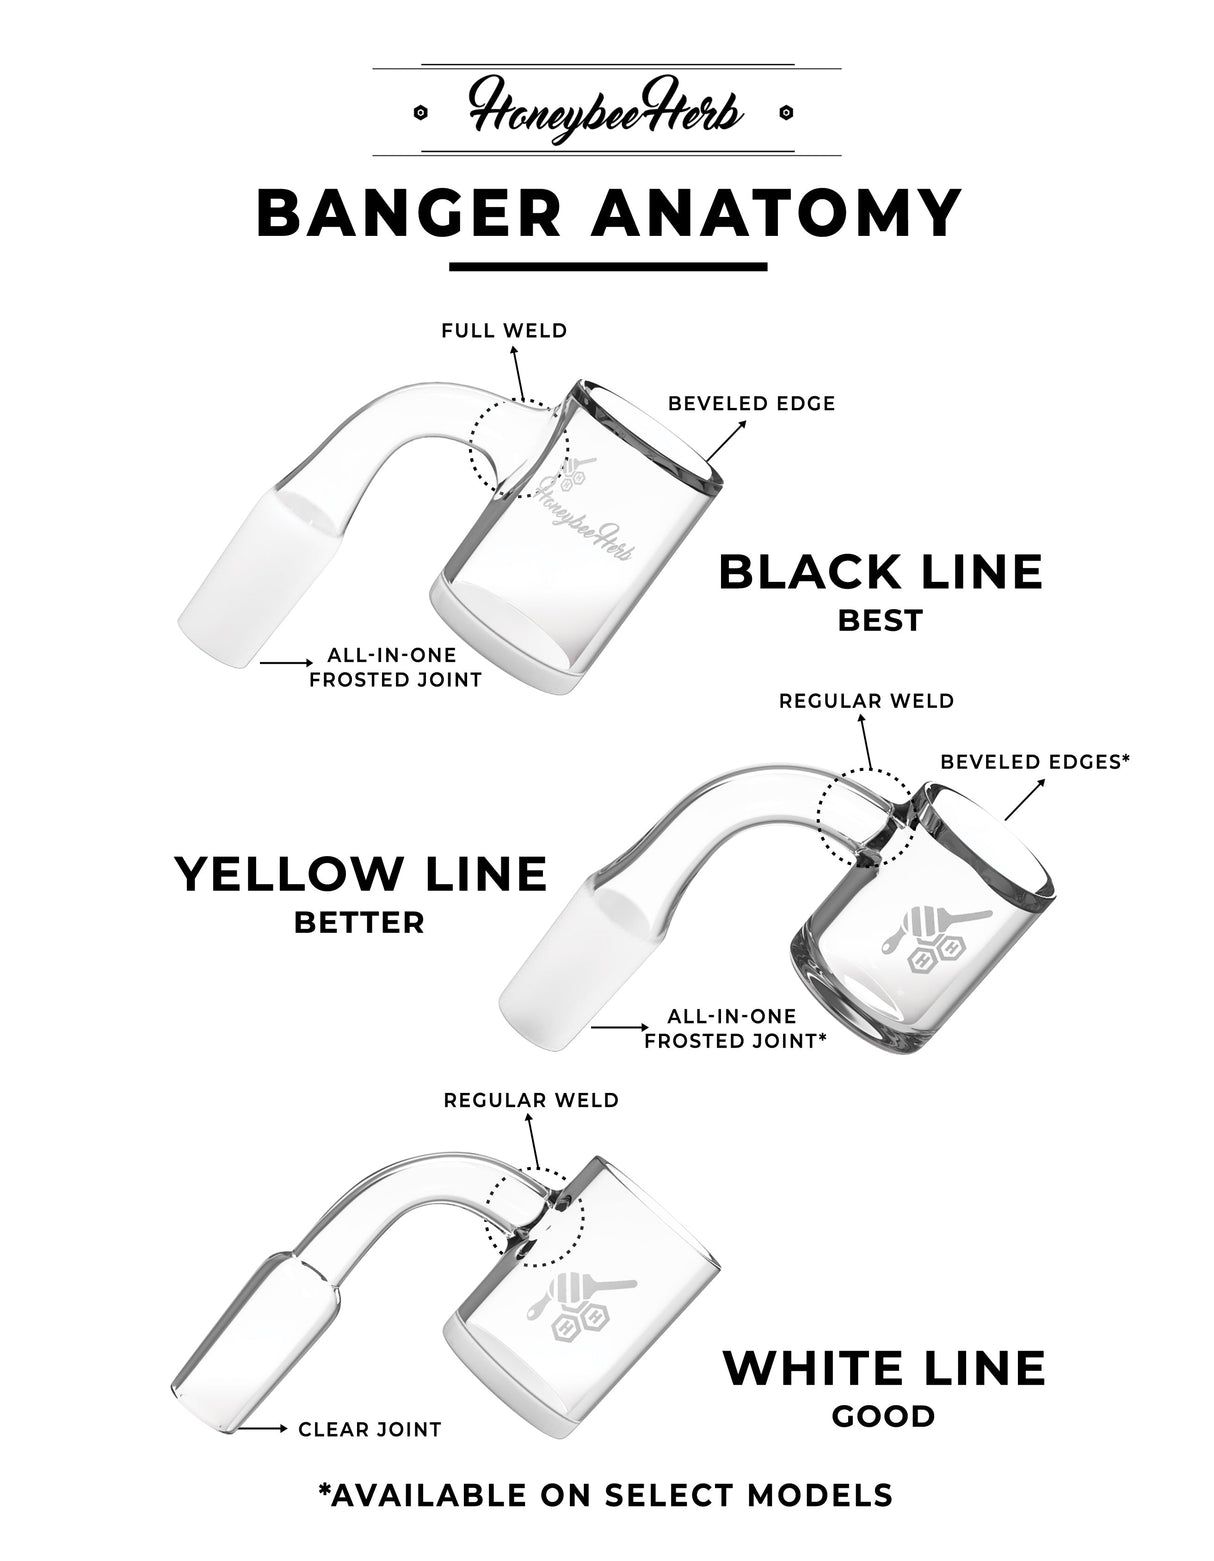 Honeybee Herb Quartz Banger Anatomy Chart showing Black, Yellow, and White Line variants with weld details.